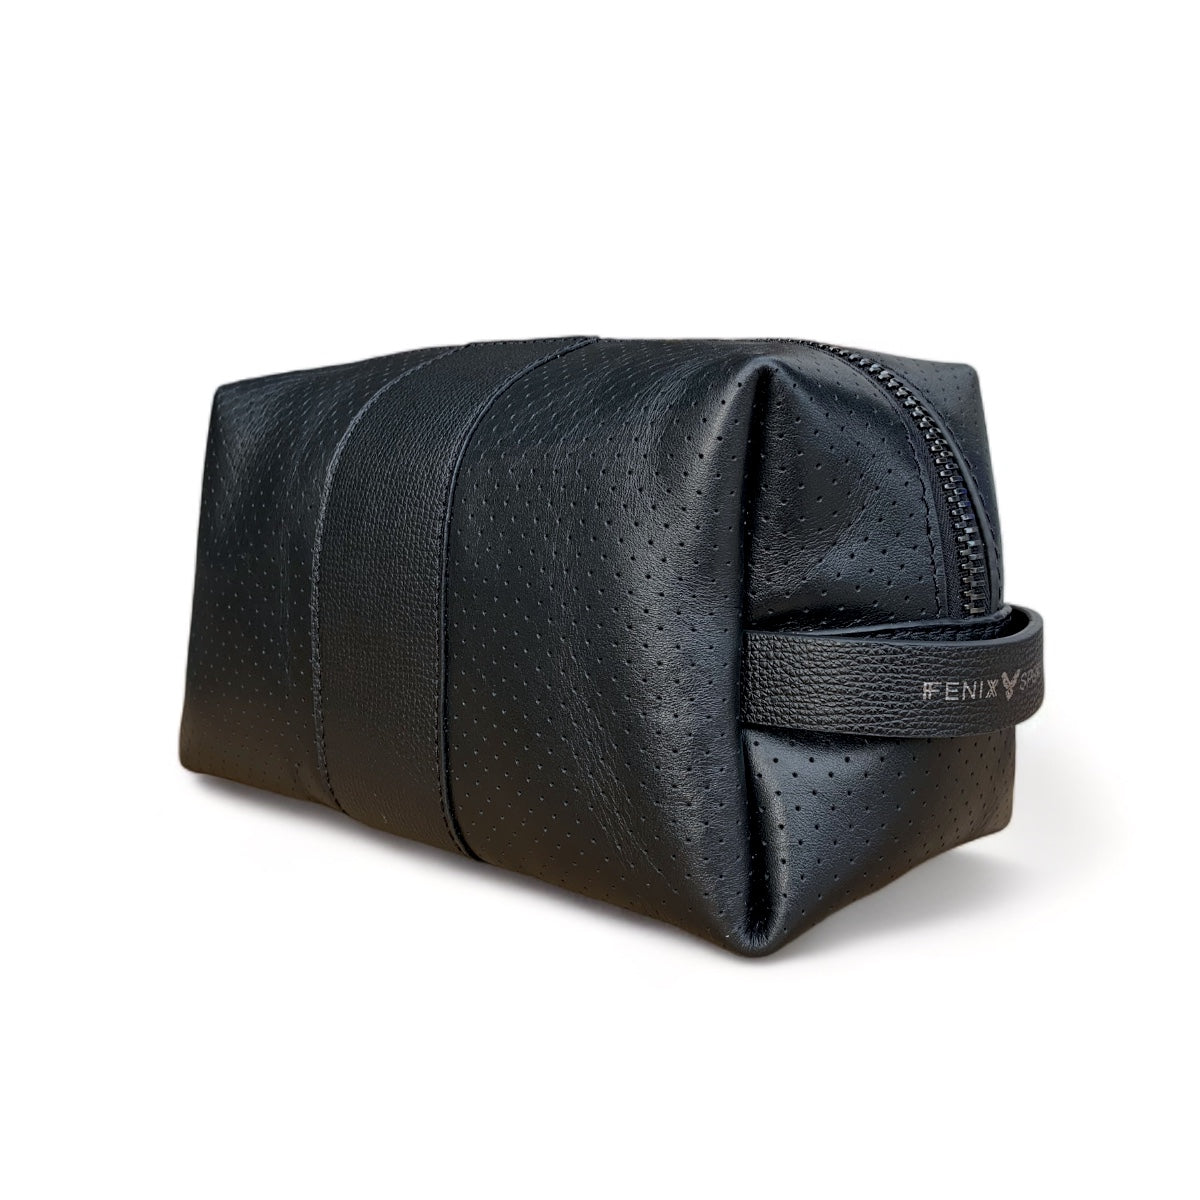 24/7 Bag - Black Leather/Gunmetal Zipper